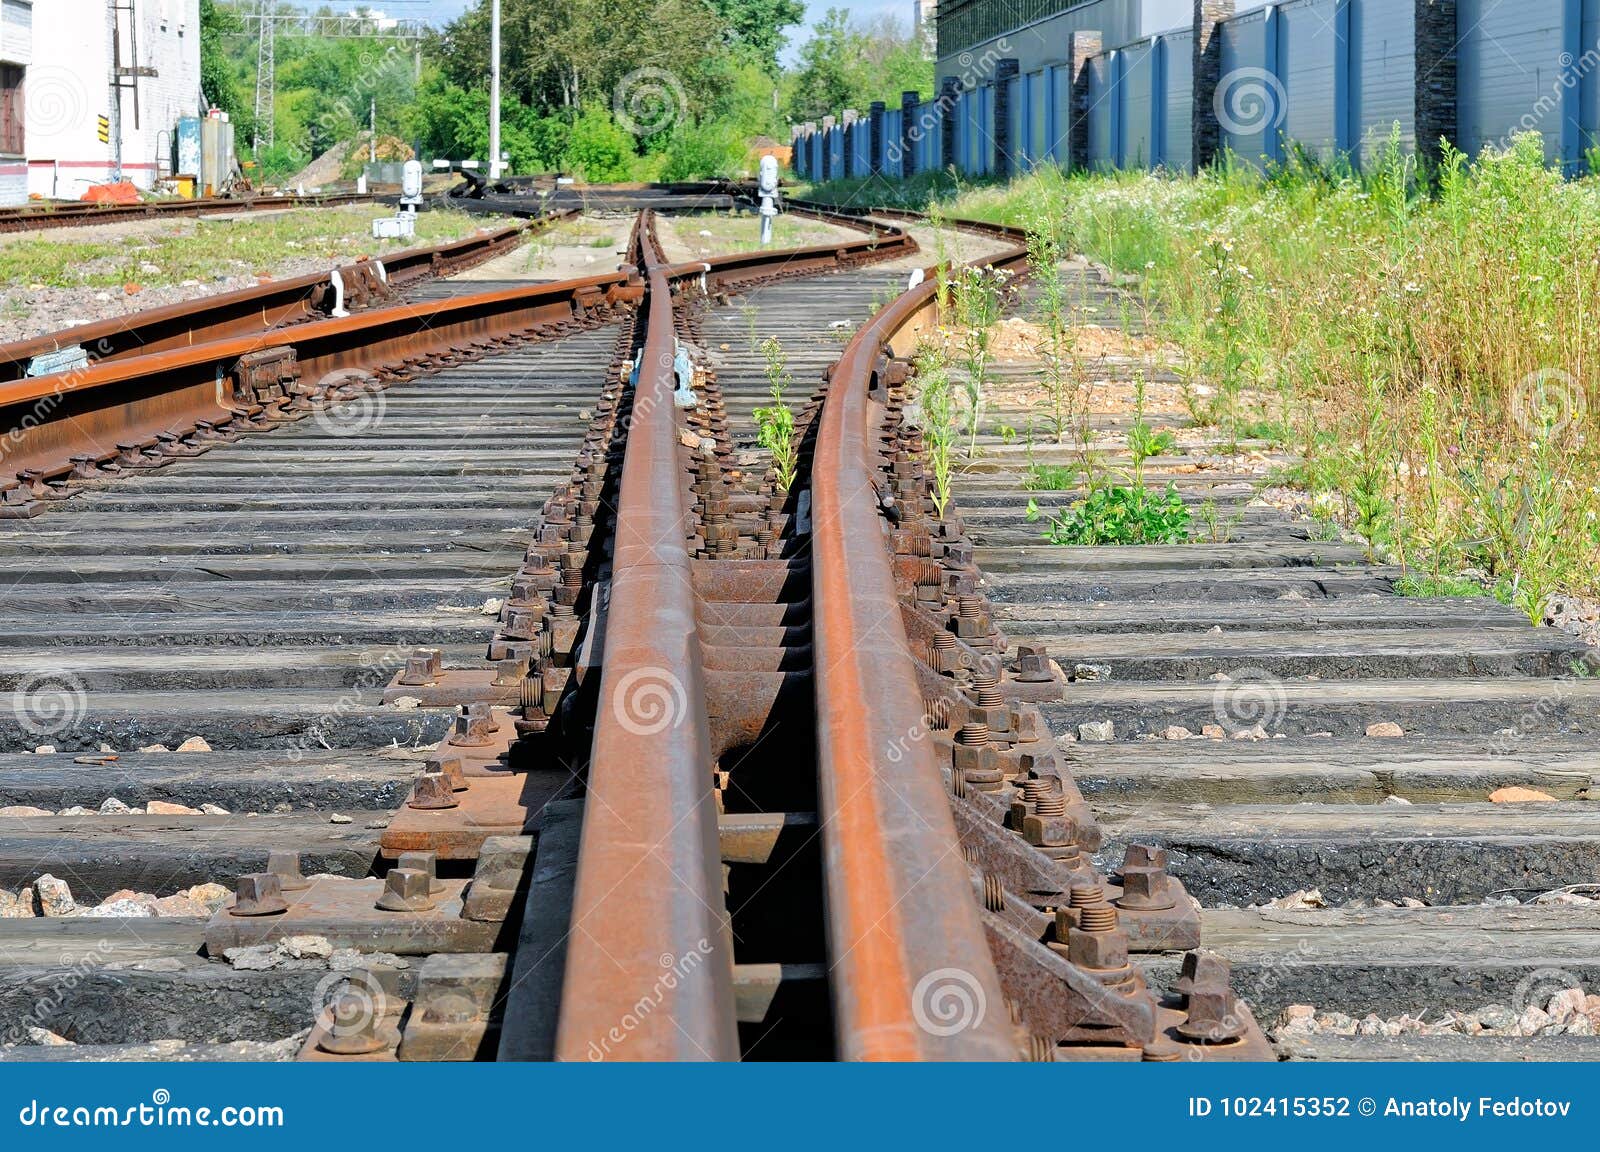 Rusty Rails: Abandoned Rail Photos